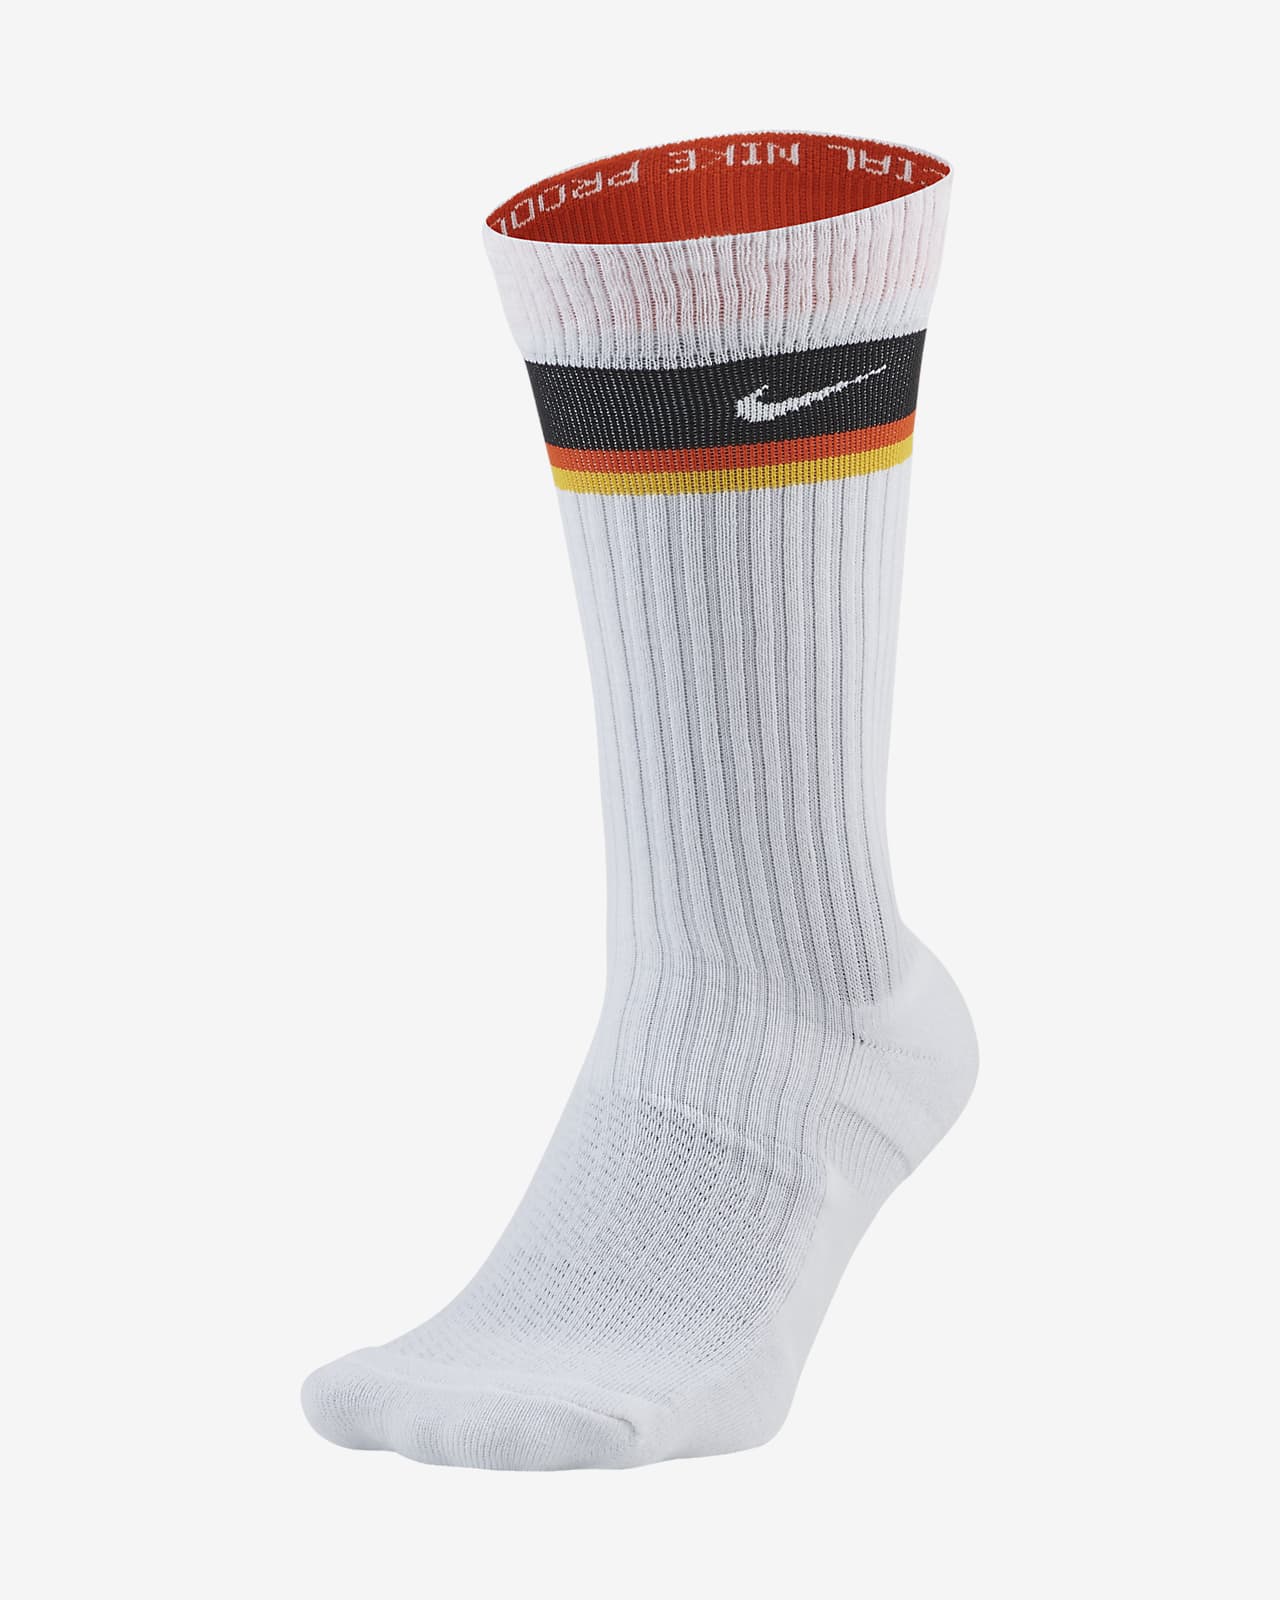 basketball crew socks